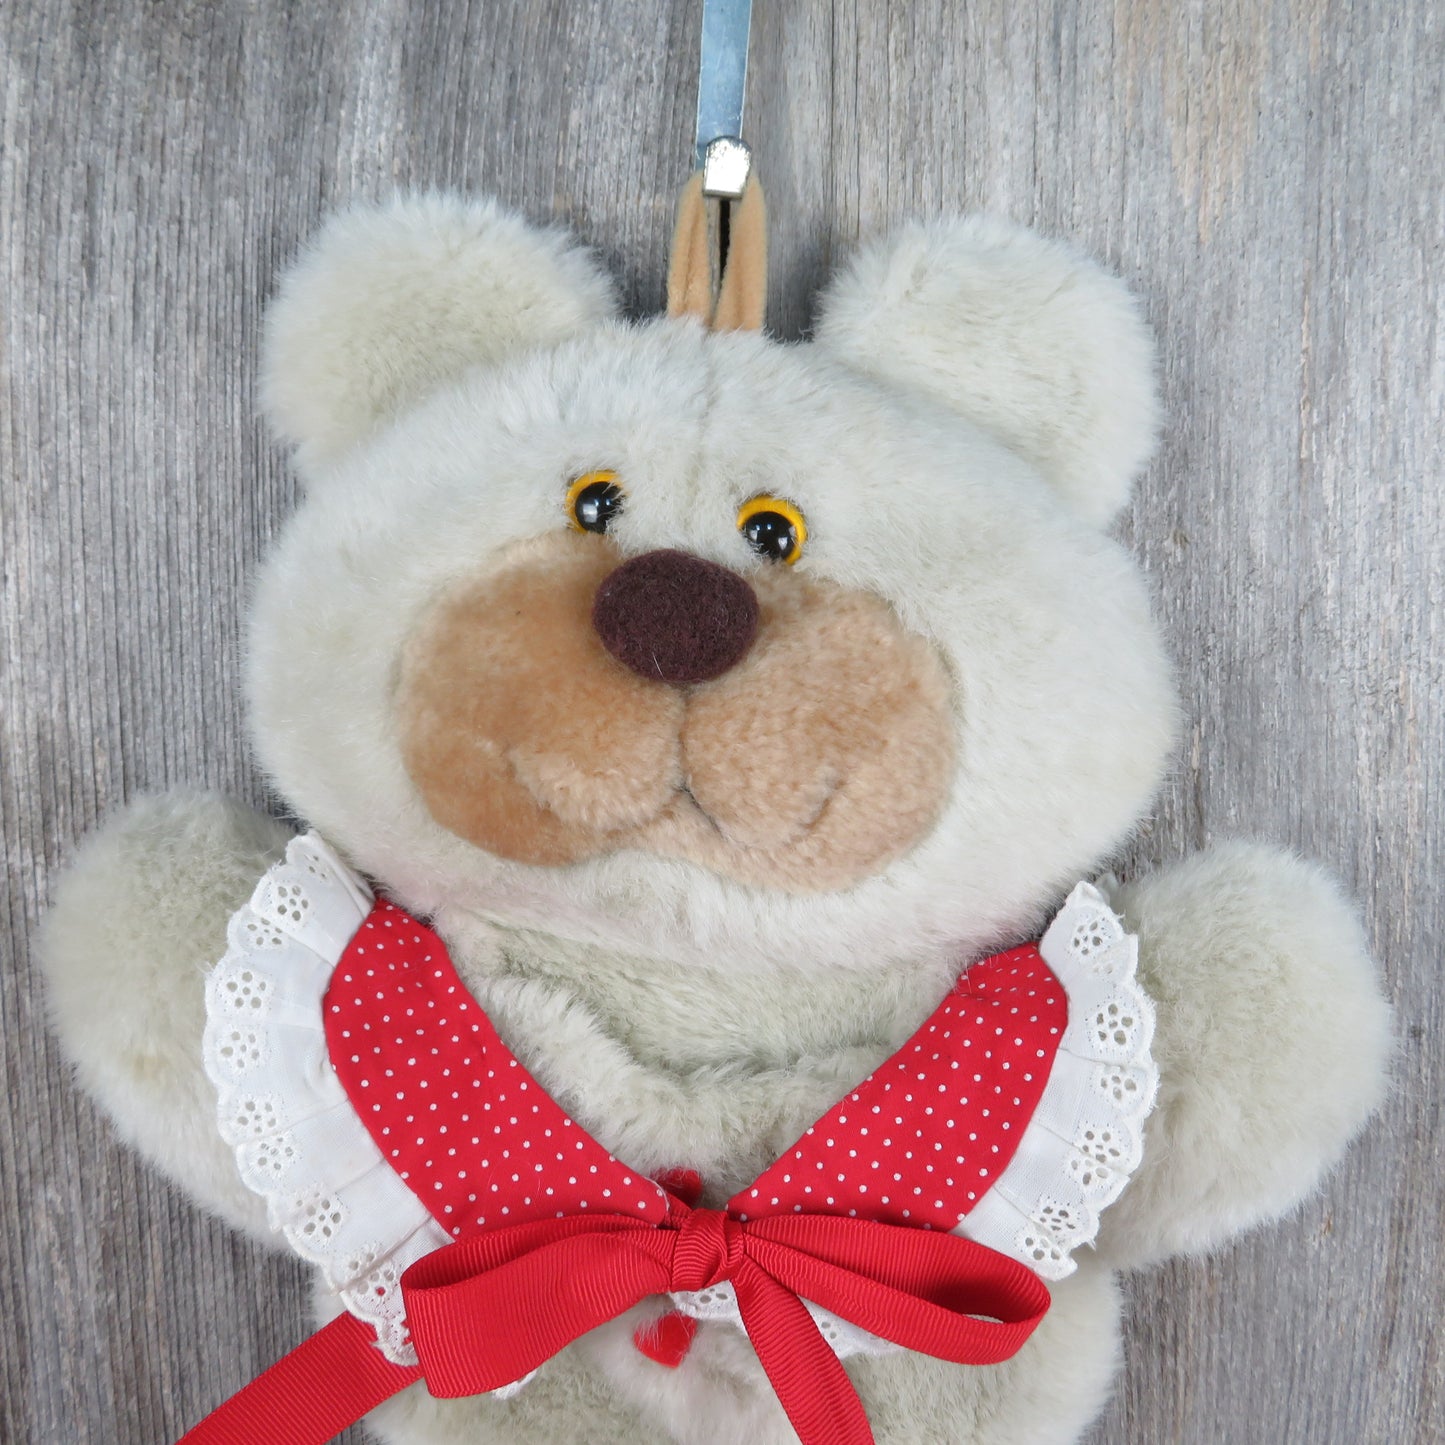 Vintage Teddy Bear Stocking Hallmark Baby Red Collar Lace Christmas Plush Stuffed Animal 1985 - At Grandma's Table